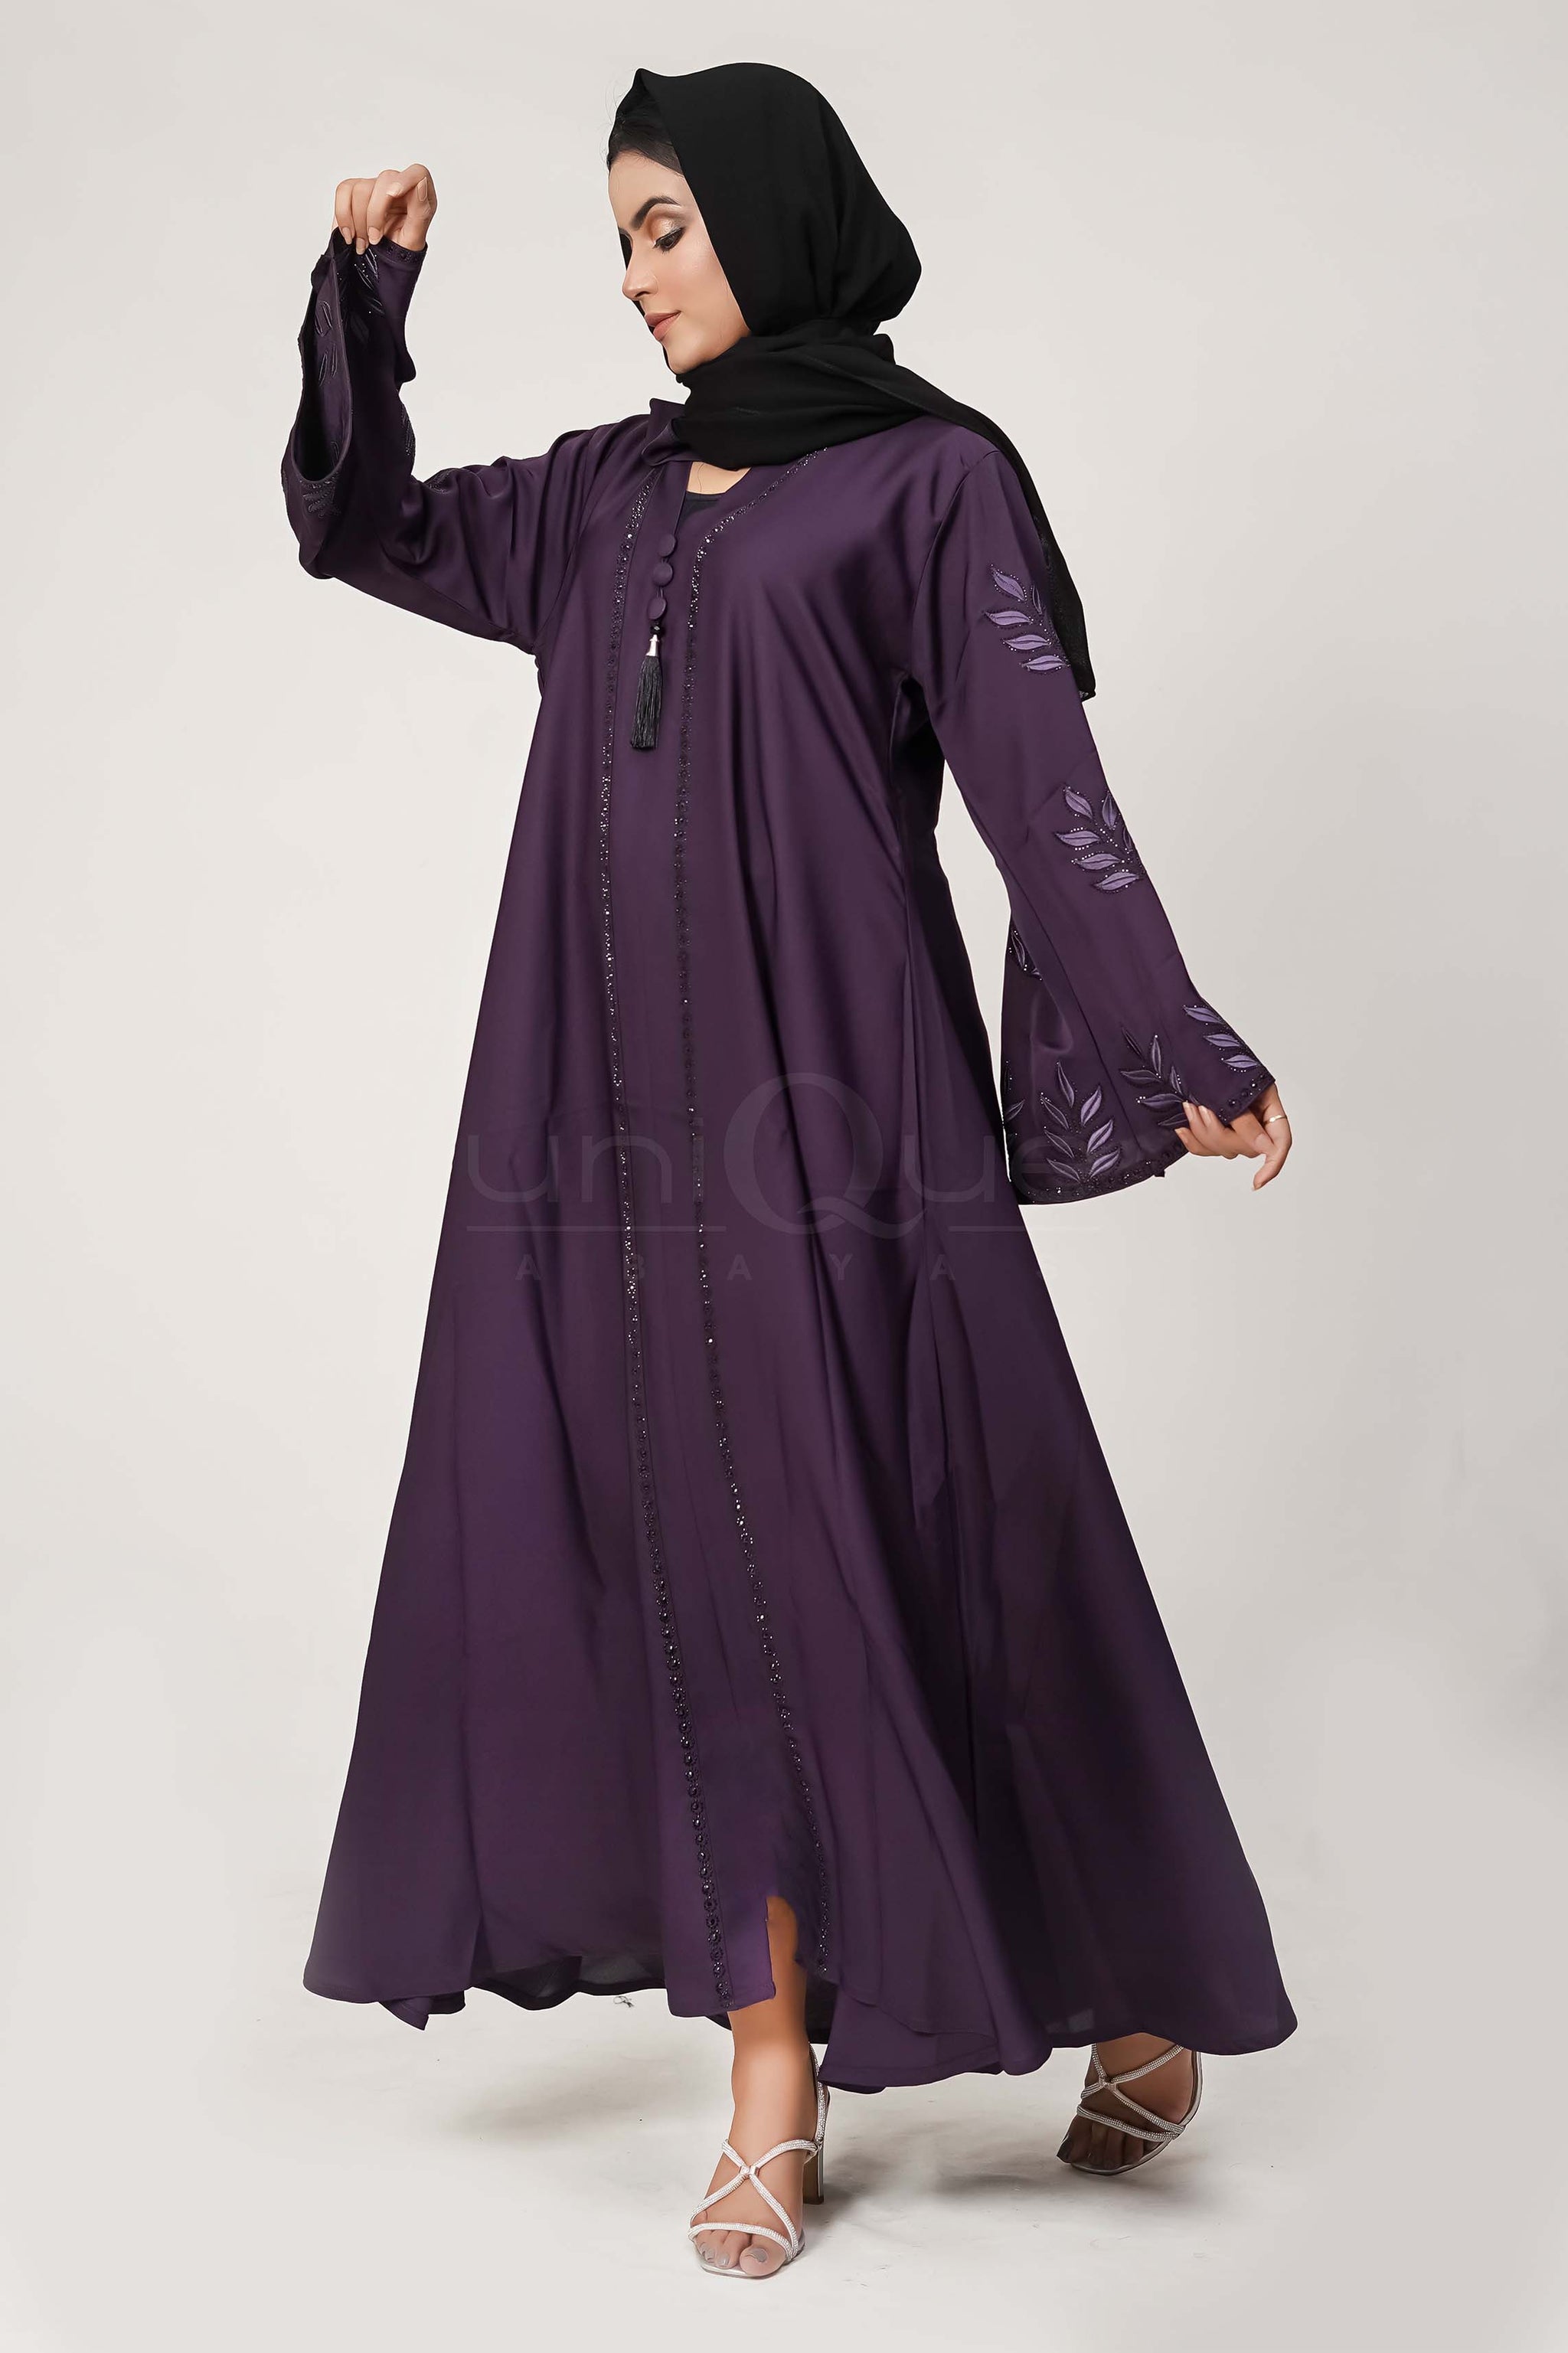 Embroidered Stone Purple Abaya by Uniquewallart Abaya for Women, Full Length